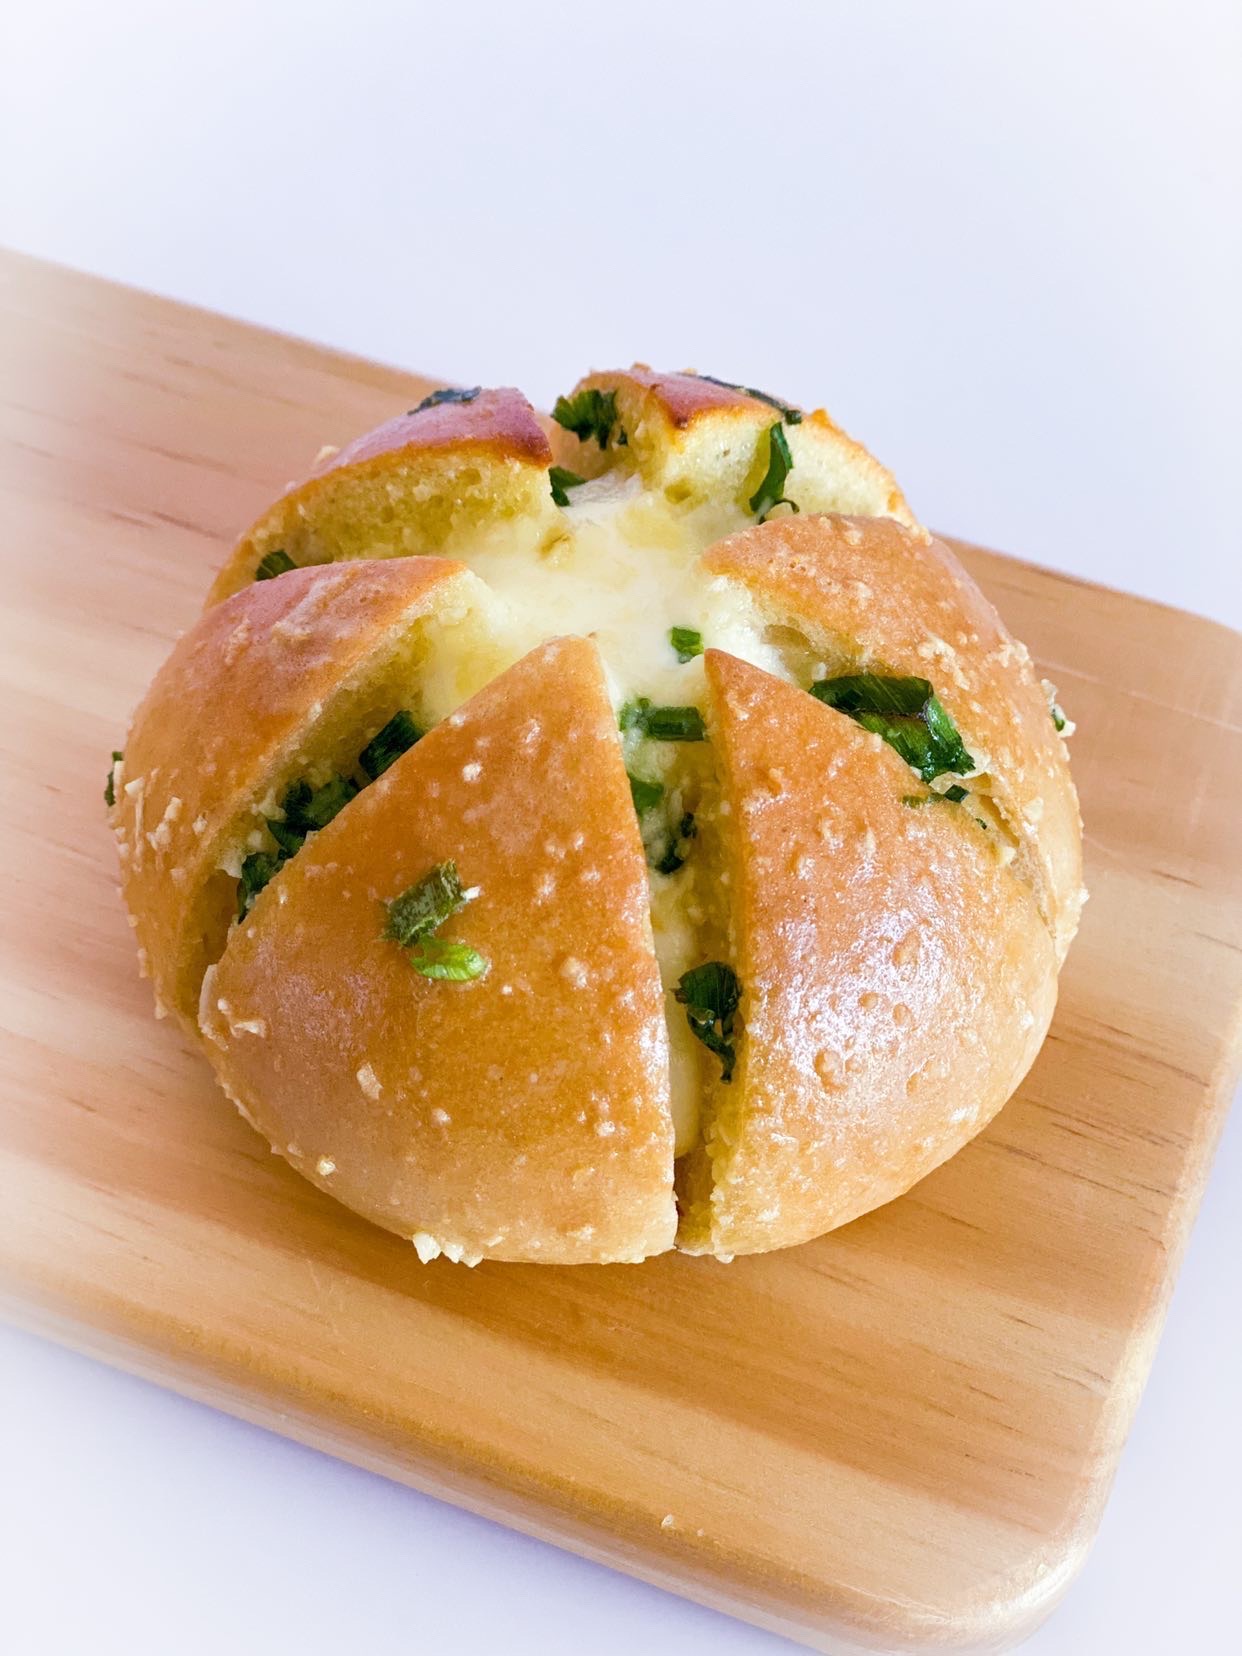 Scallion garlic cream cheese bun on a wooden cutting board, with the bun's oozy cream cheese interior visible.